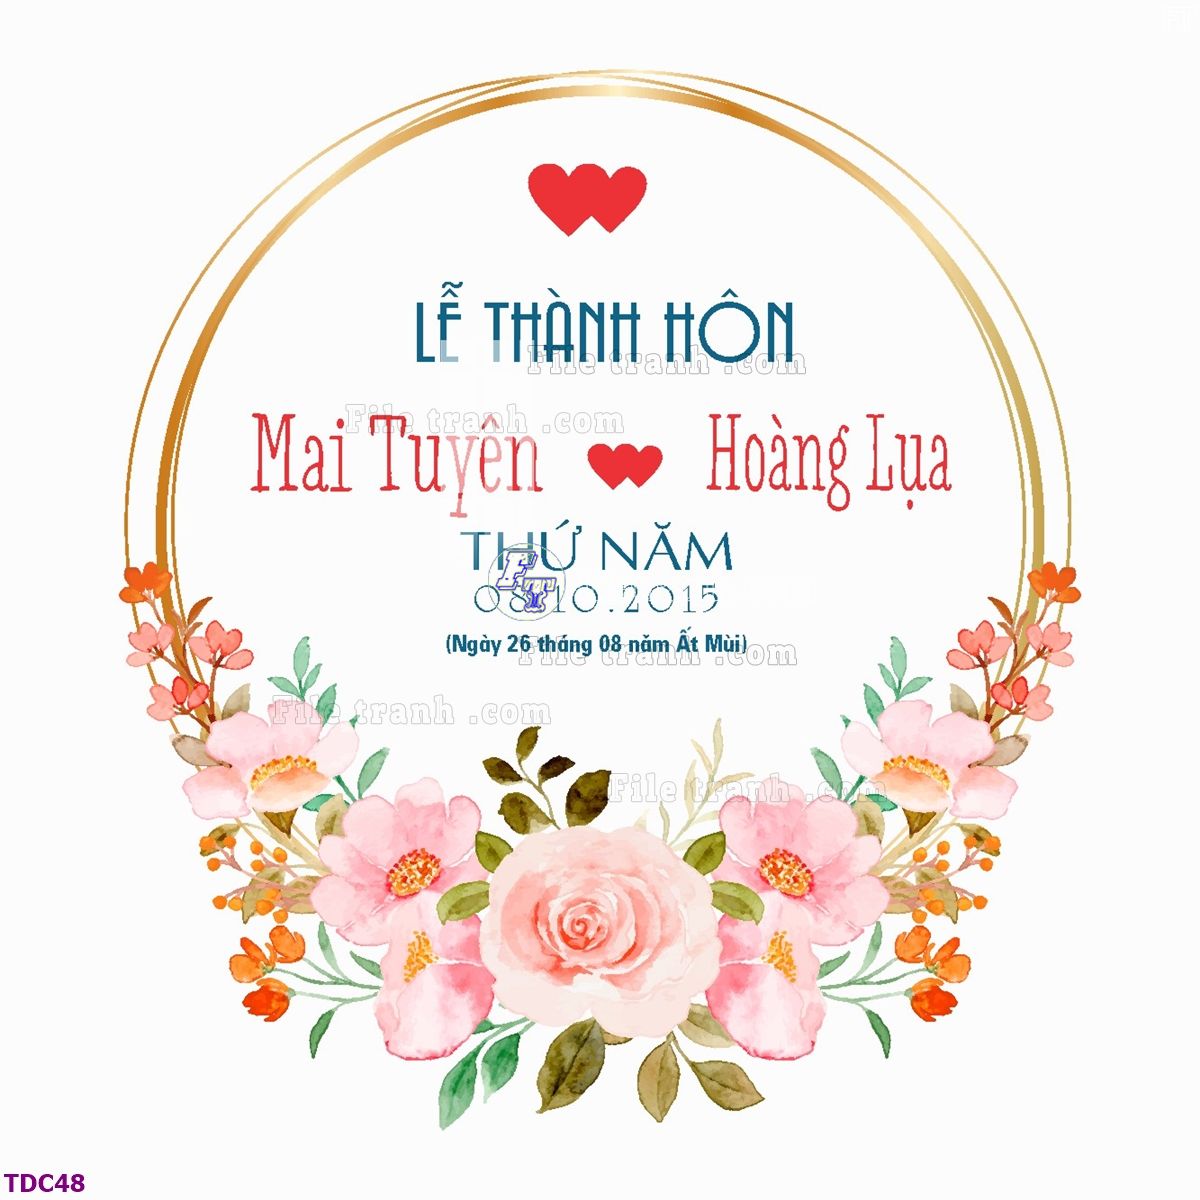 https://filetranh.com/tuong-nen/file-banner-phong-tiec-dam-cuoi-tdc48.html